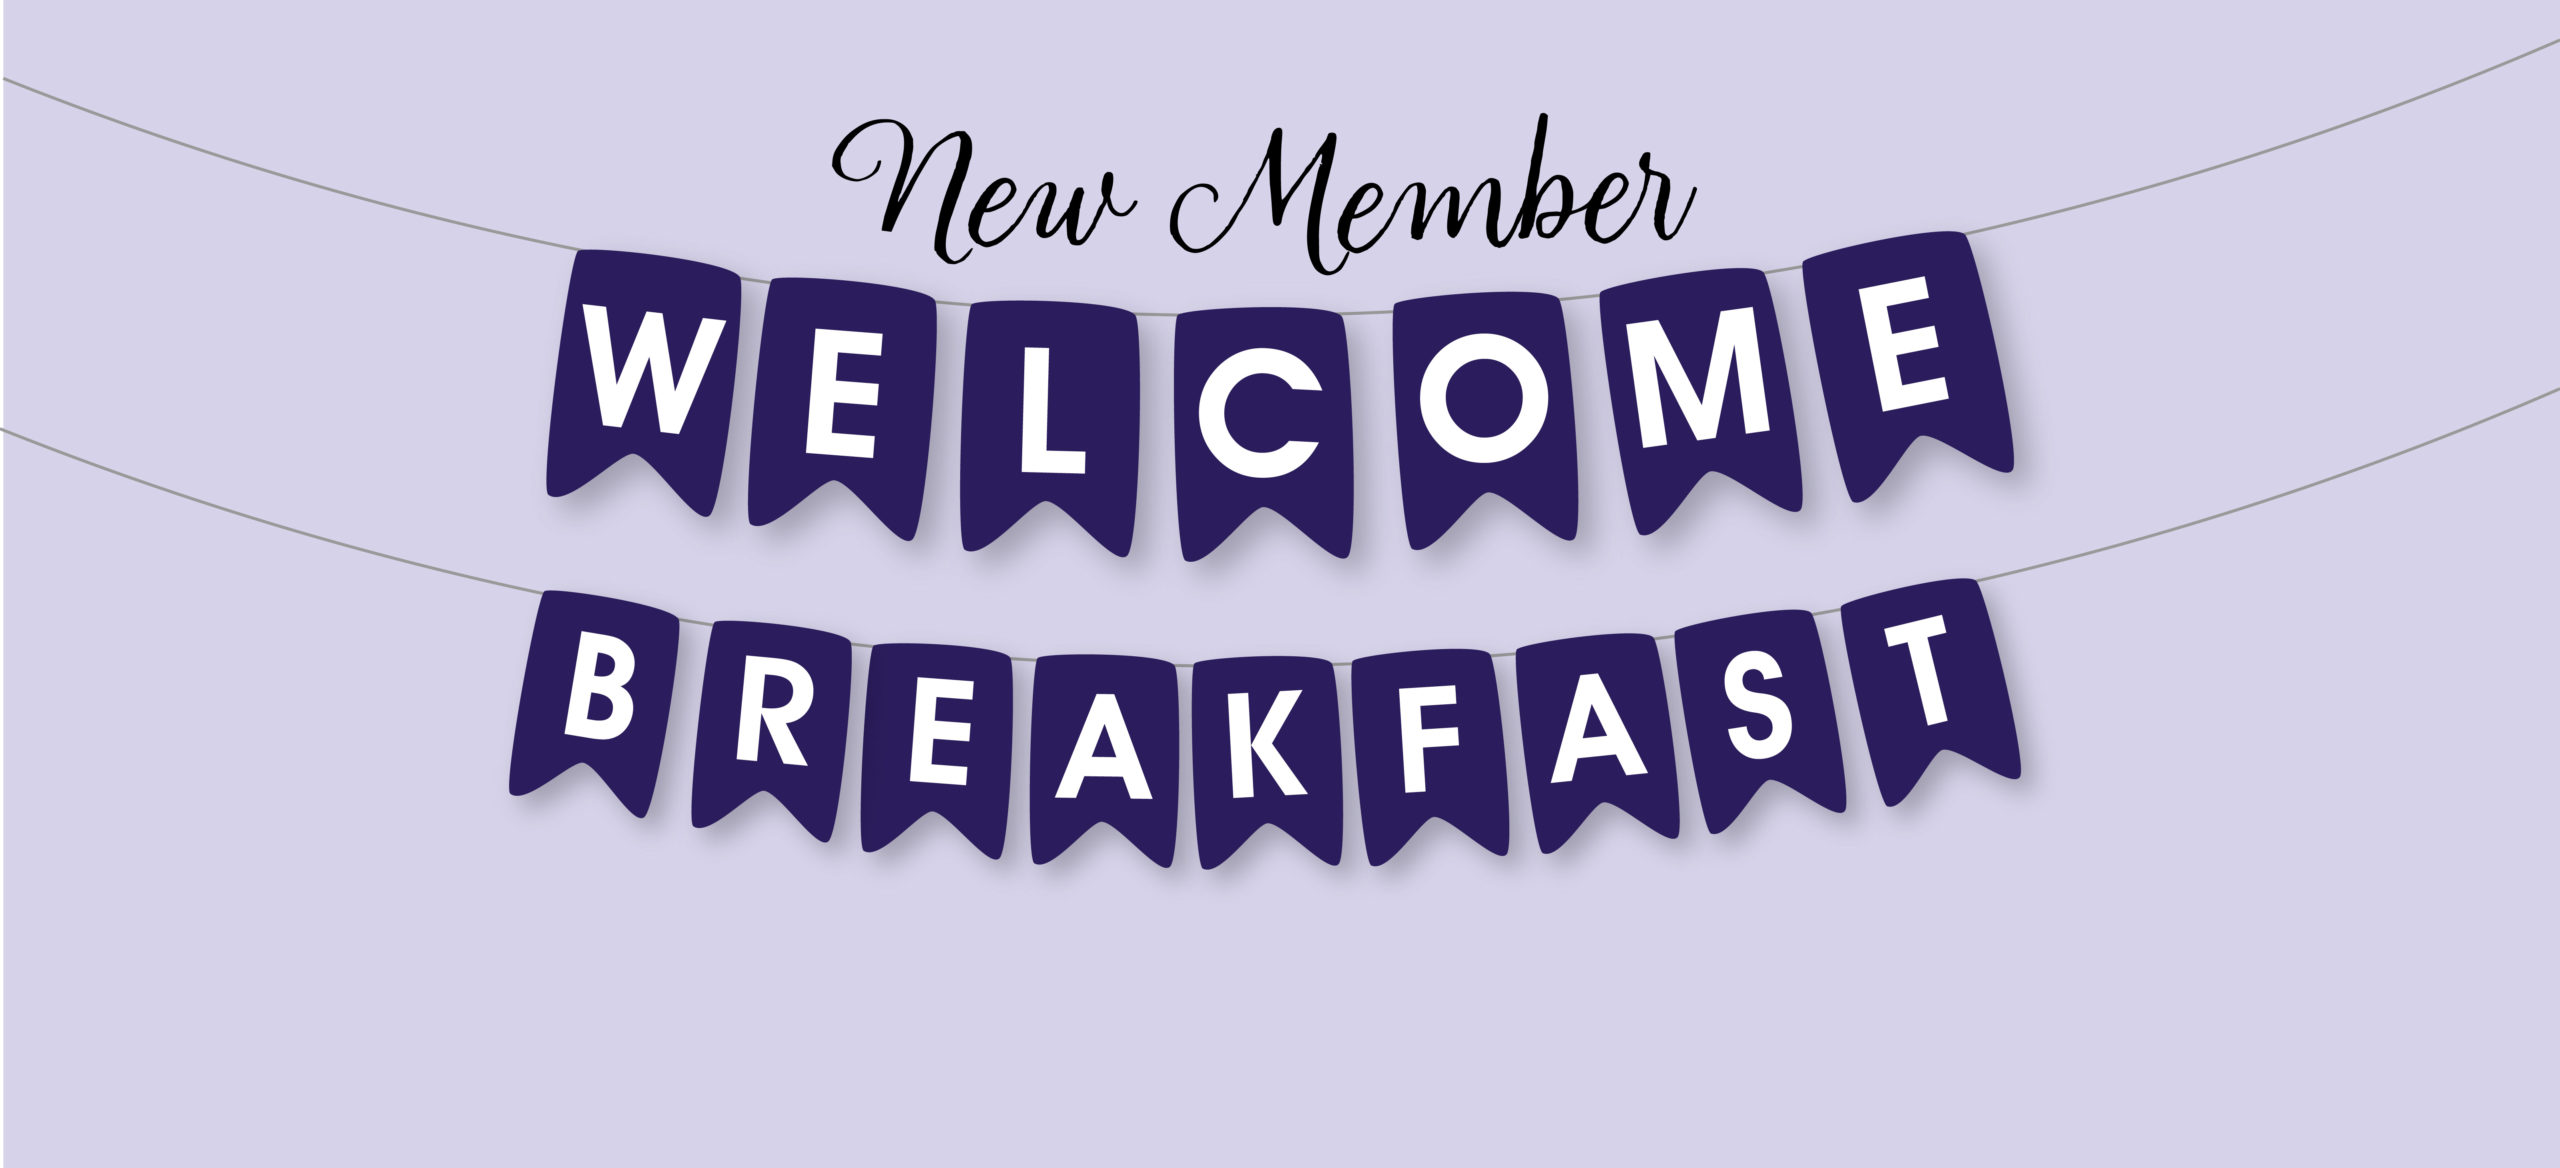 New Member Welcome Breakfast